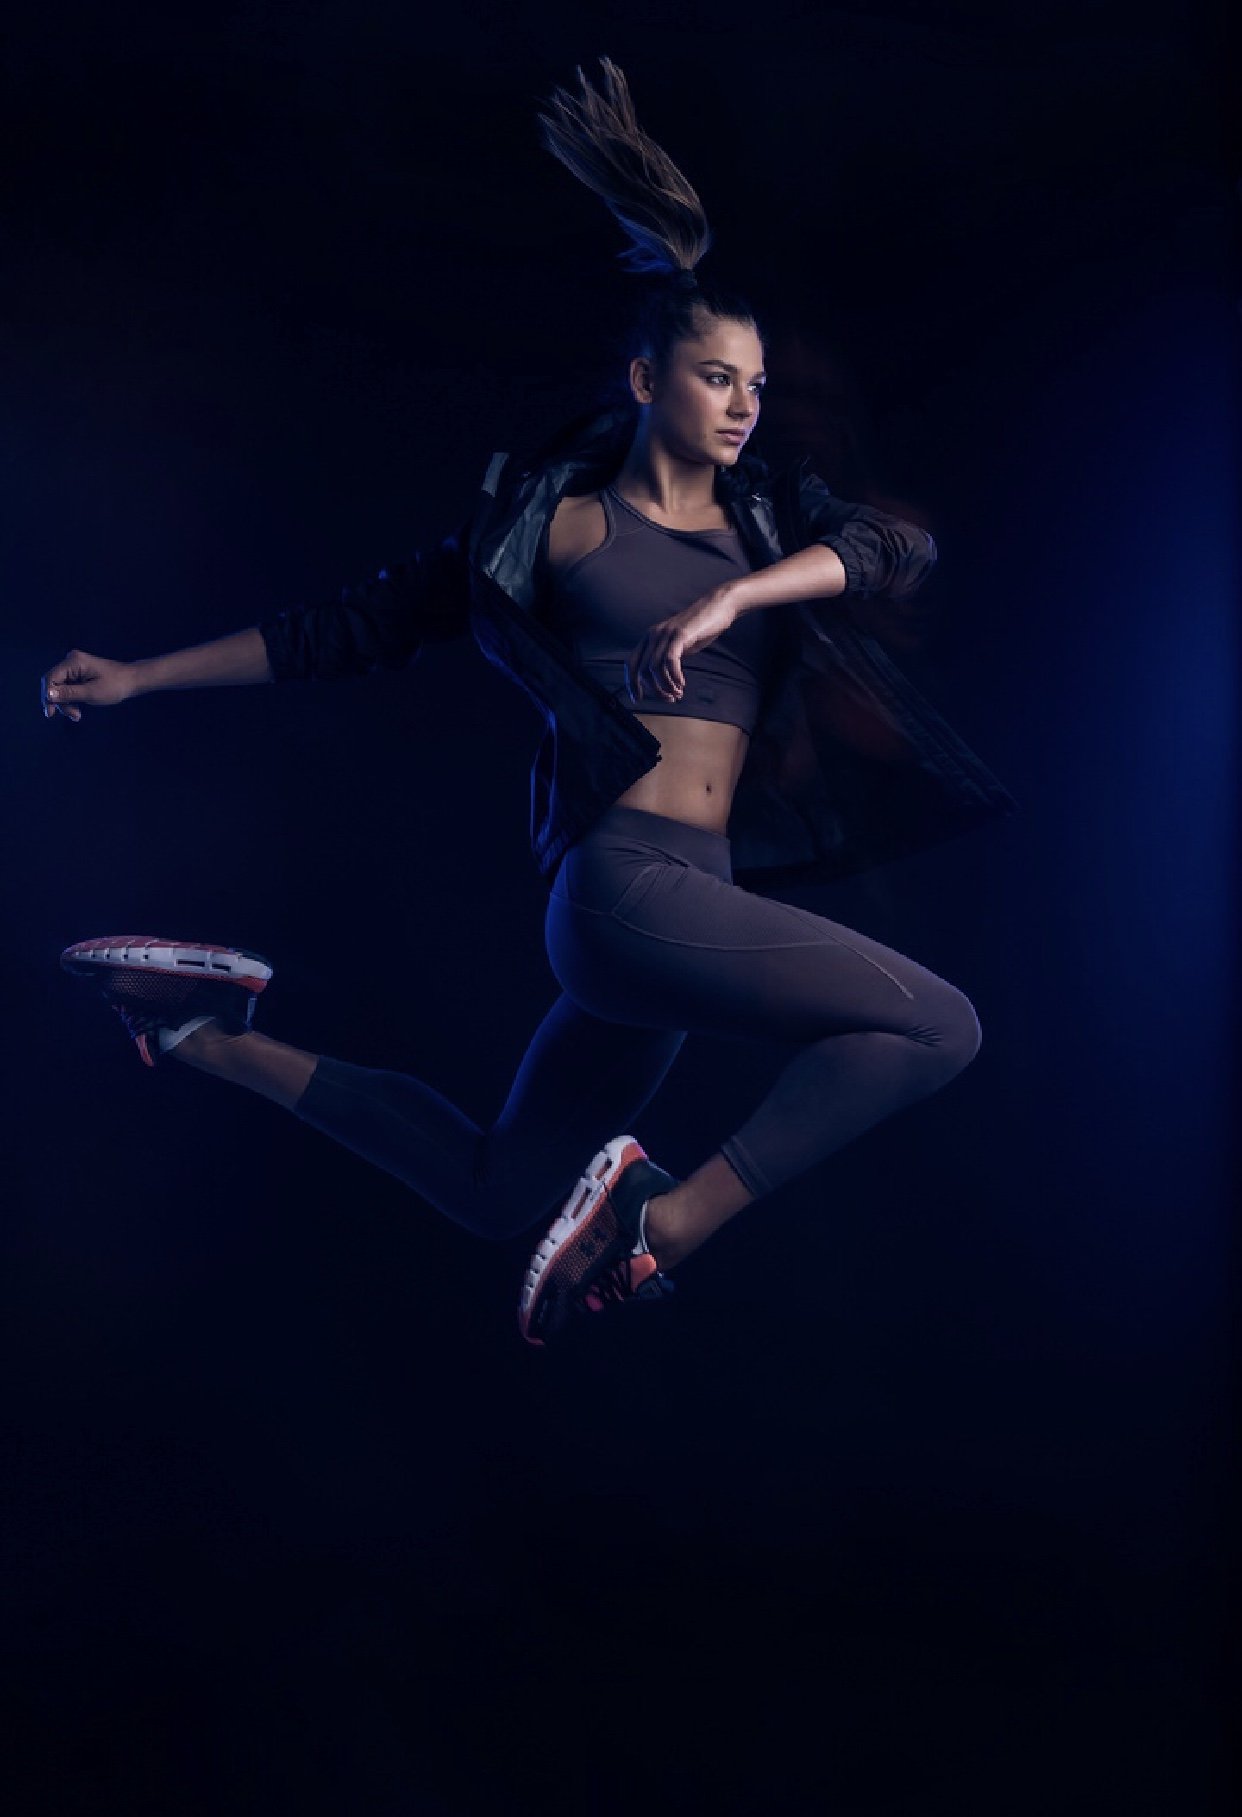 Rhythmic-Gymnastics Twitter: "Aleksandra Soldatova for Under Armour sports equipment campaign https://t.co/JUHIEtpGpV" / Twitter